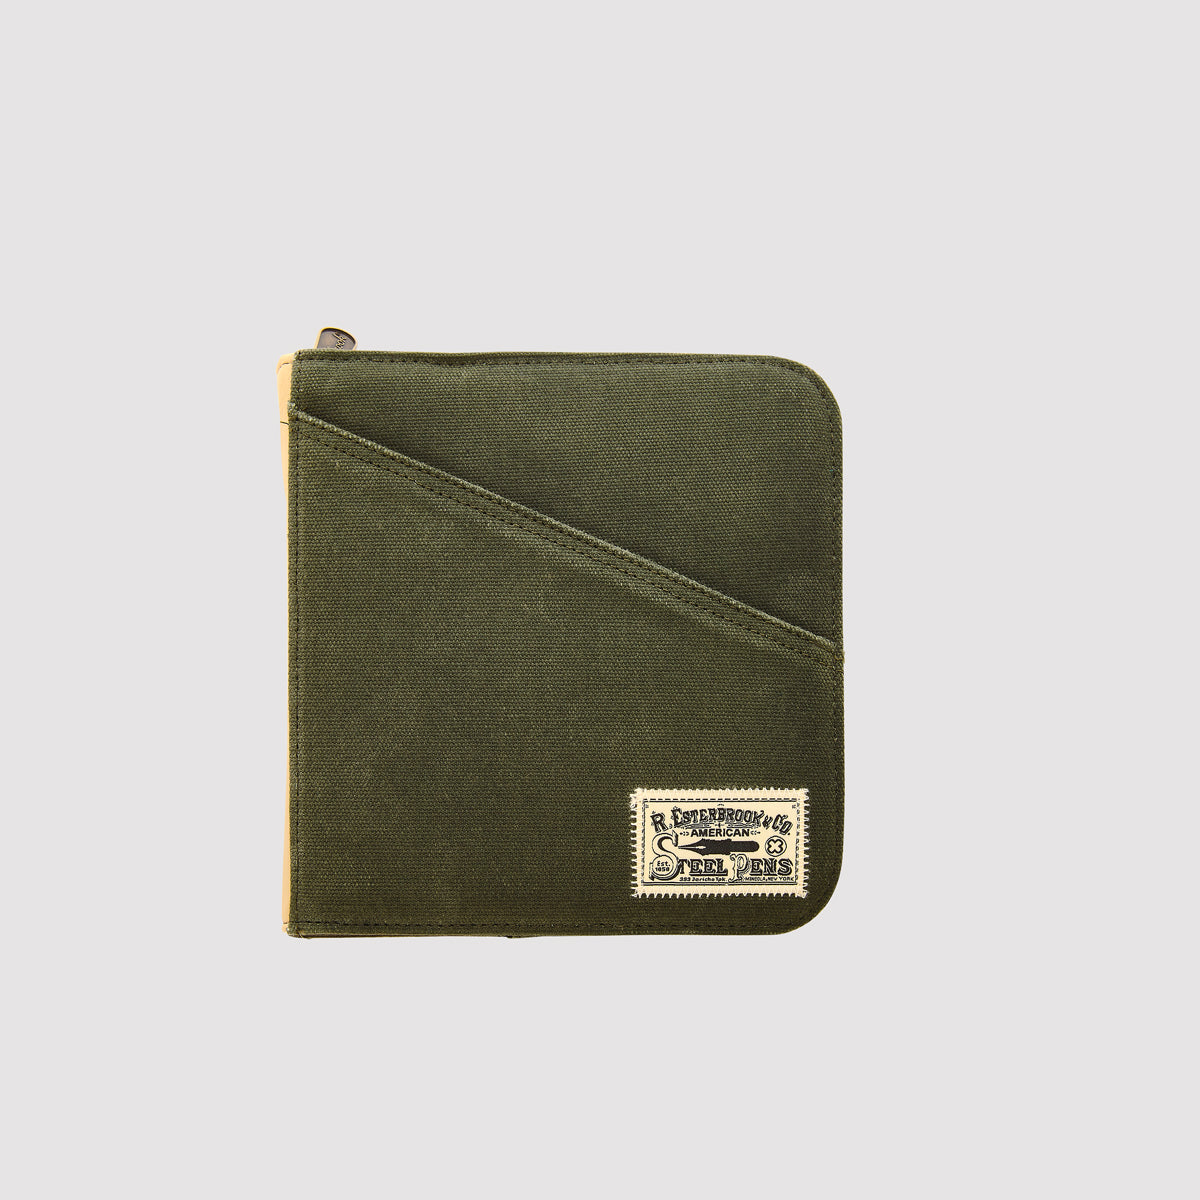 Esterbrook 20 pc zipper pen case - Army Green